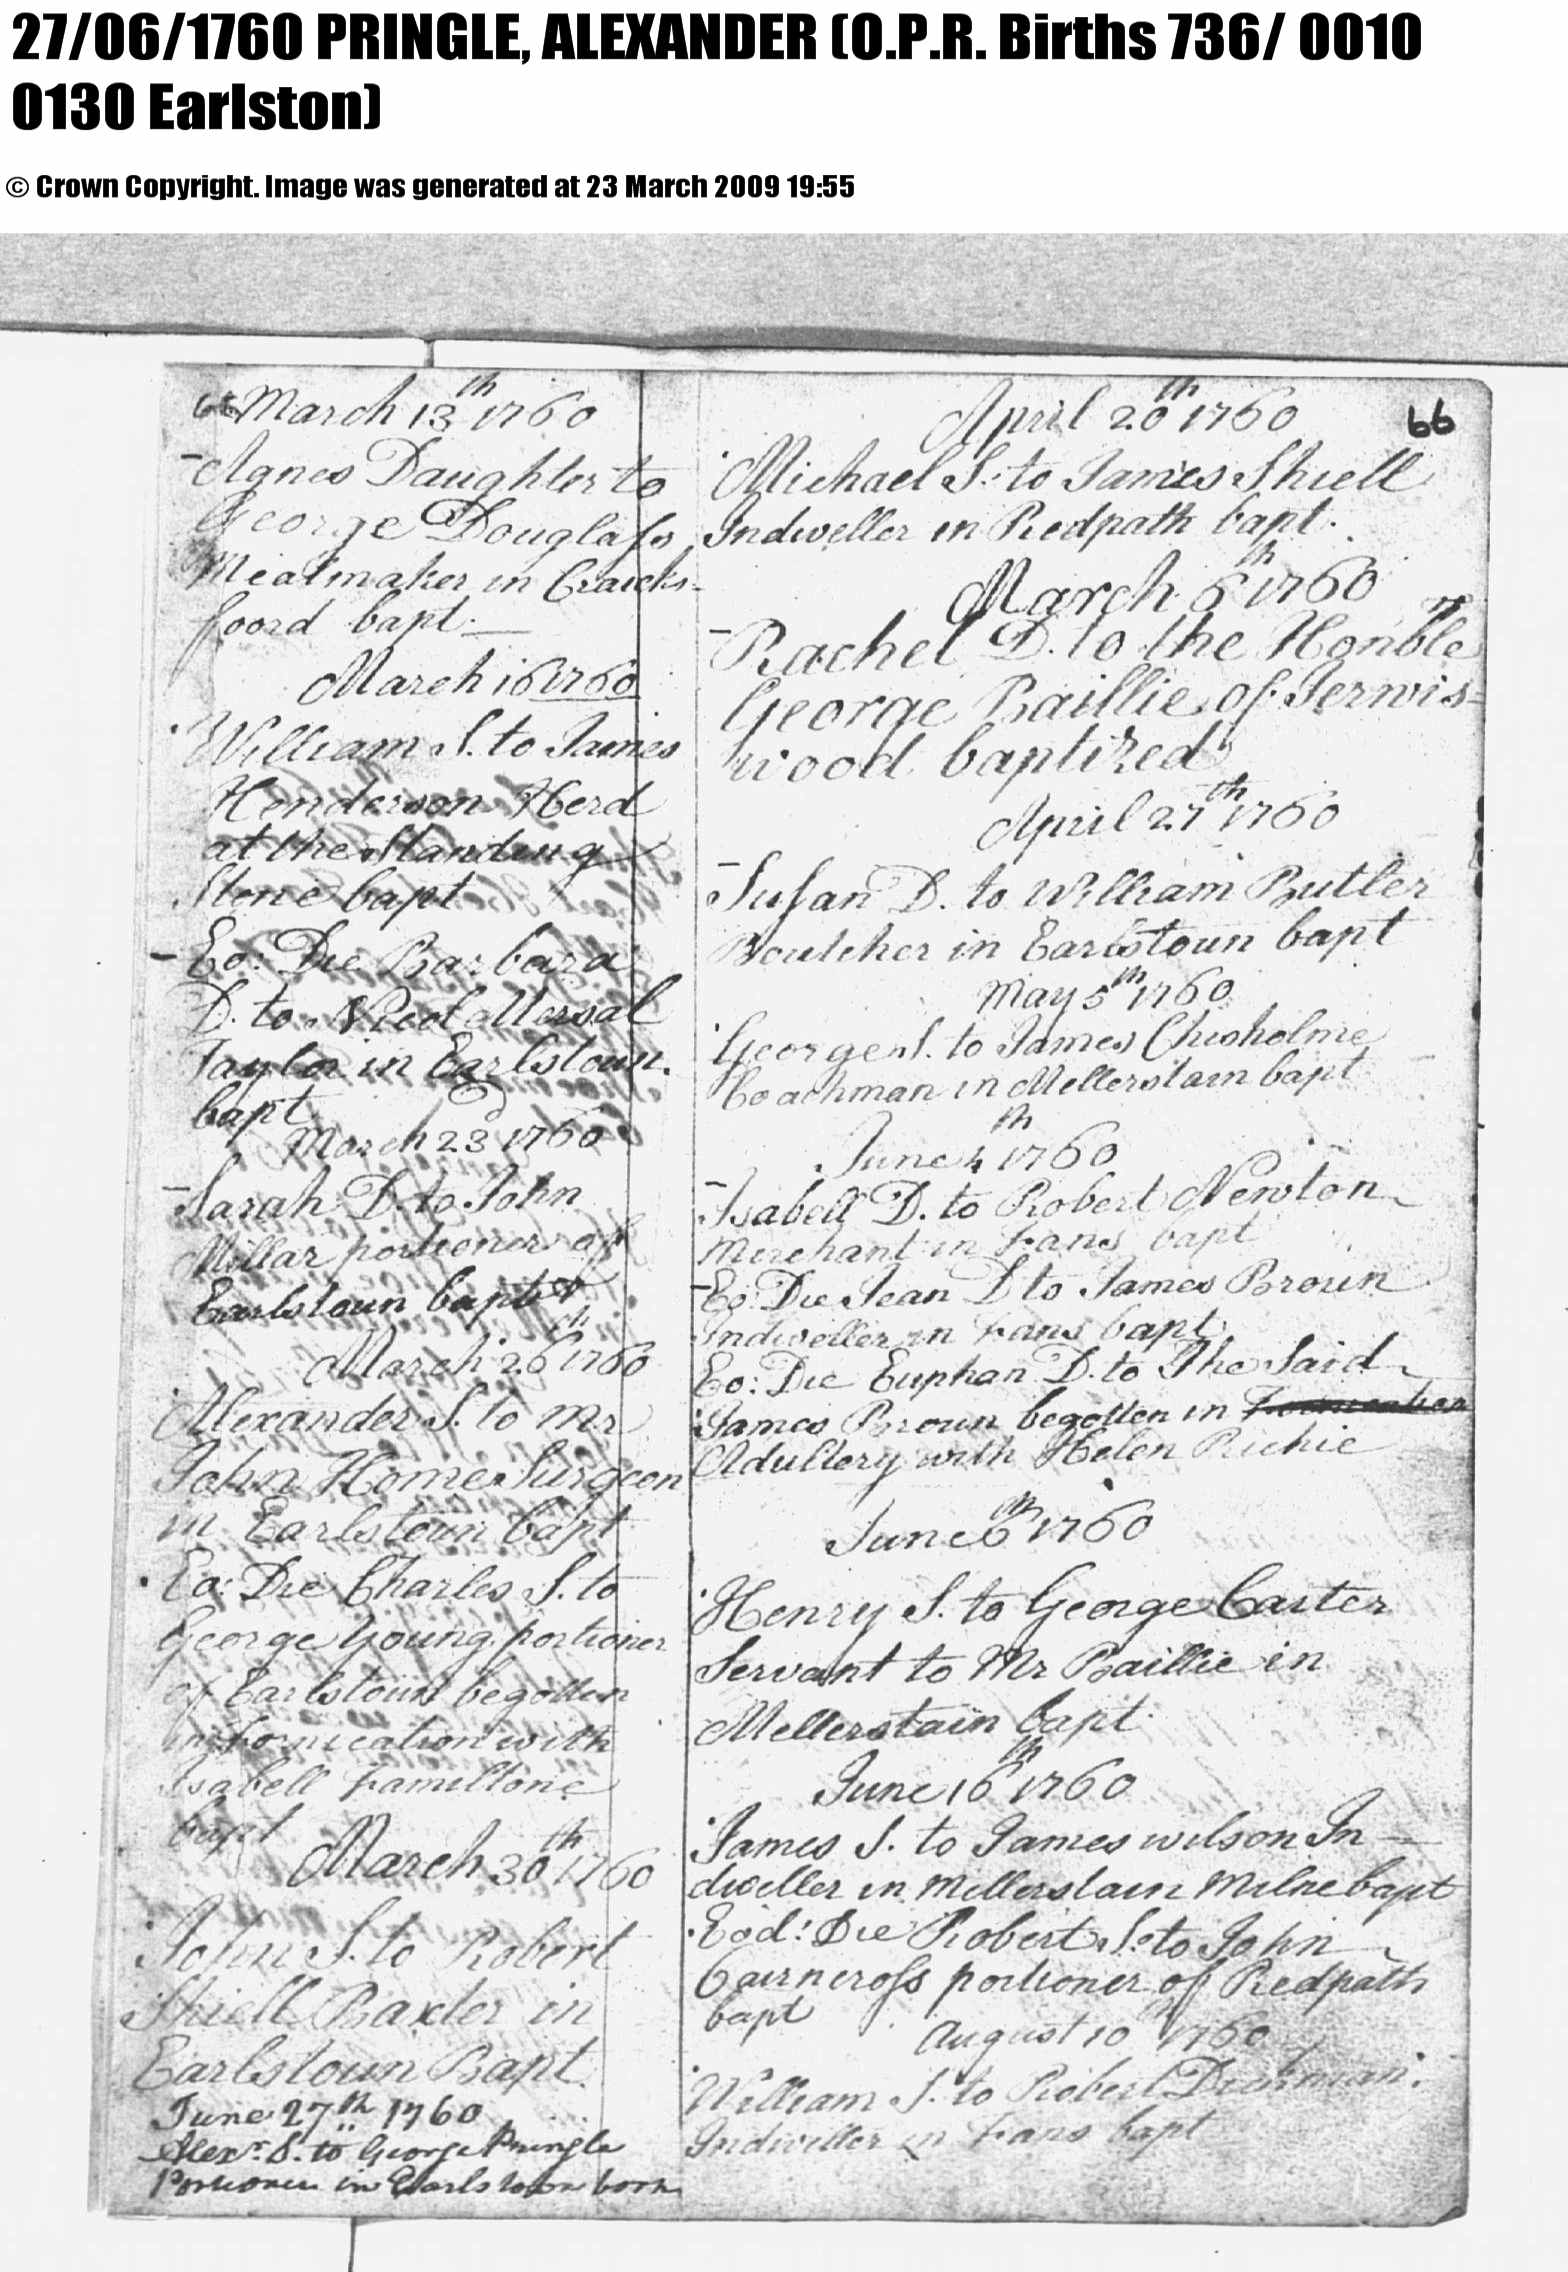 alexanderpringle1760, June 27, 1760, Linked To: <a href='profiles/i1306.html' >Robert Pringle 🧬</a>